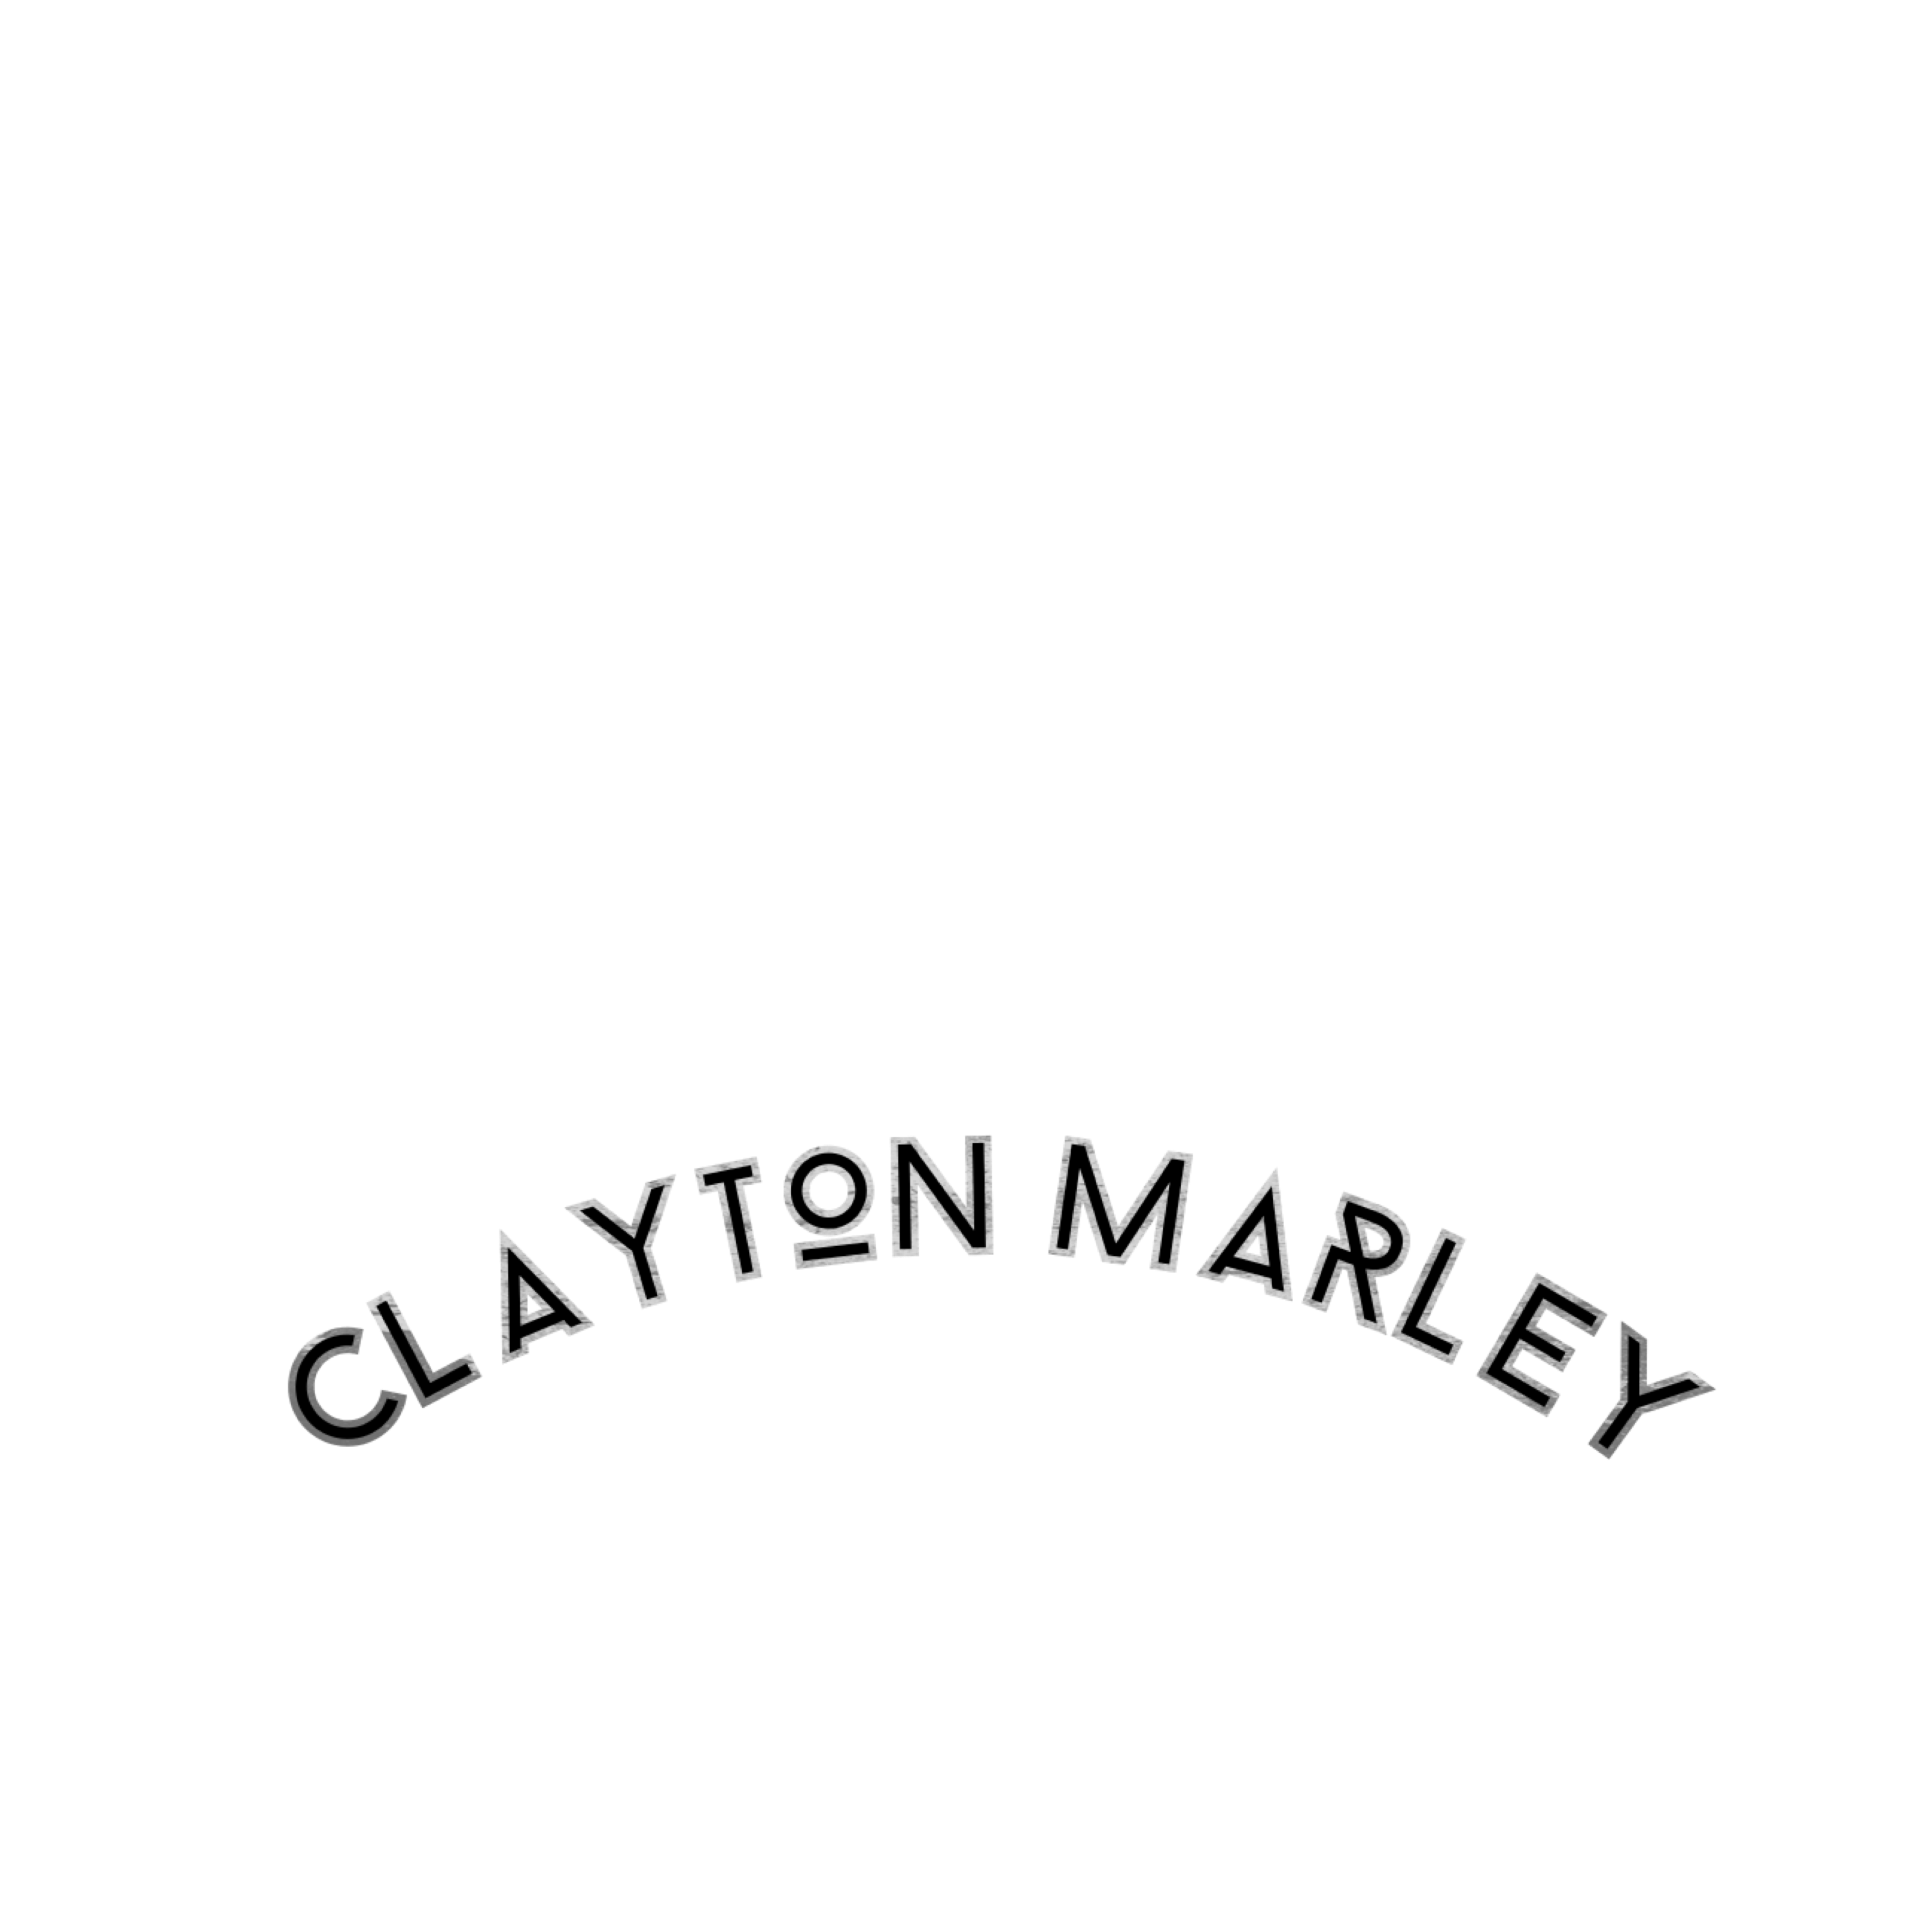 CCI2M - Entreprise - Conception Clayton Marley  /  9431-7930 Qc inc